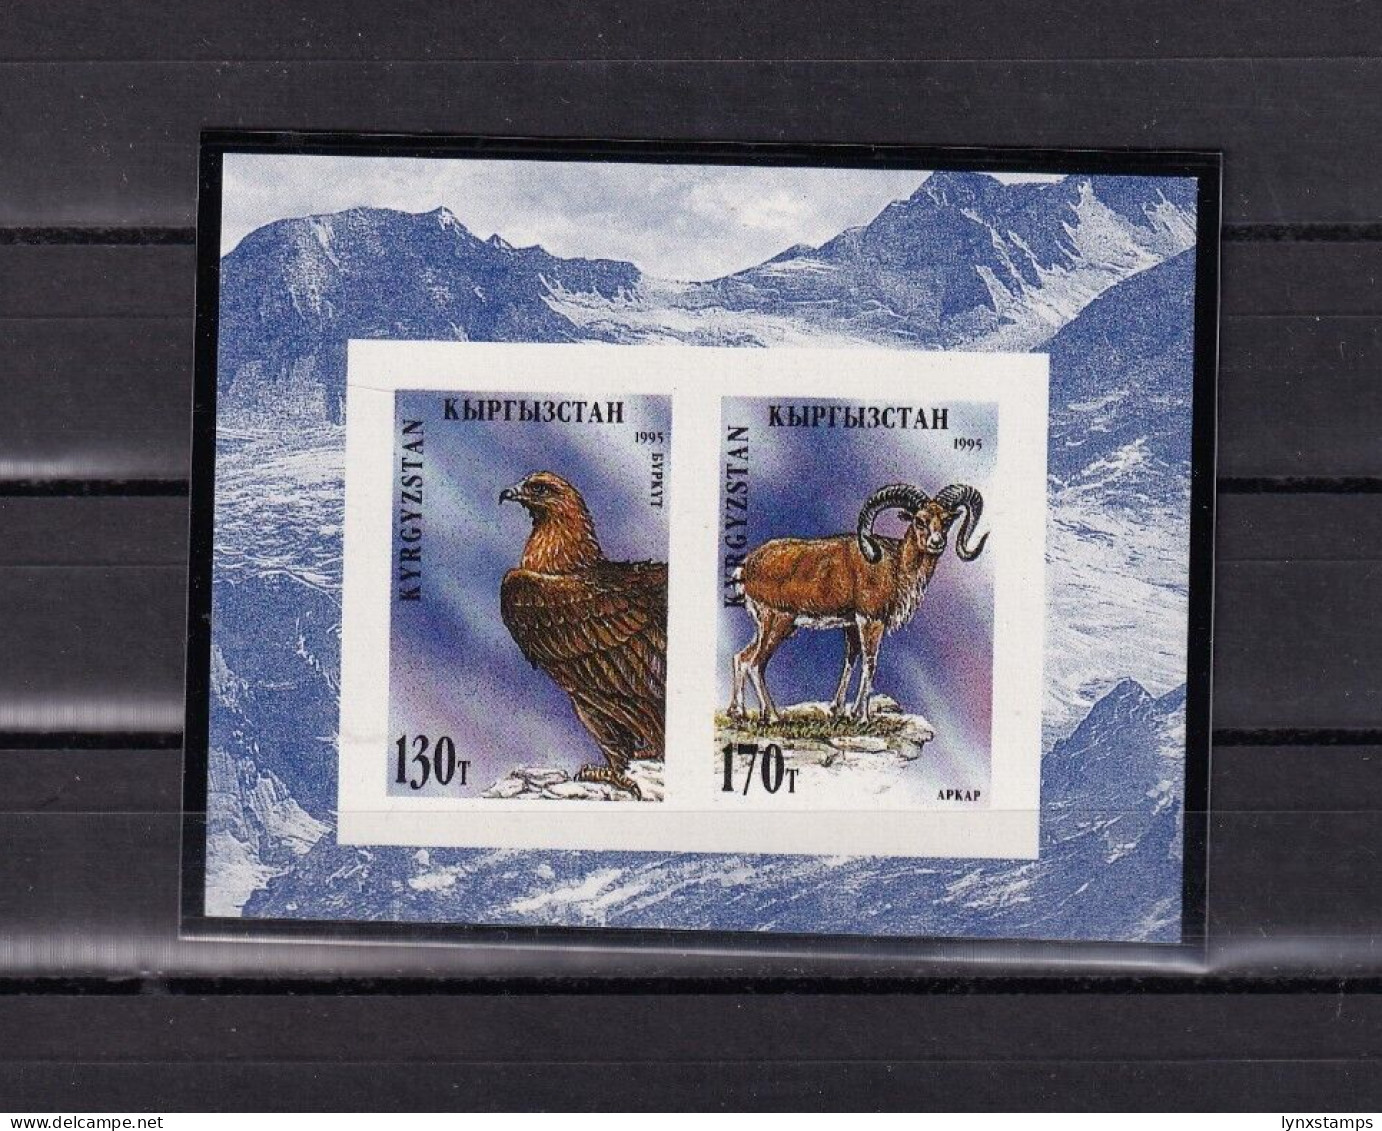 SA01 Kyrgyzstan 1995 Fauna Of Kyrgyzstan Imperforated Mini Sheet Mint - Kyrgyzstan